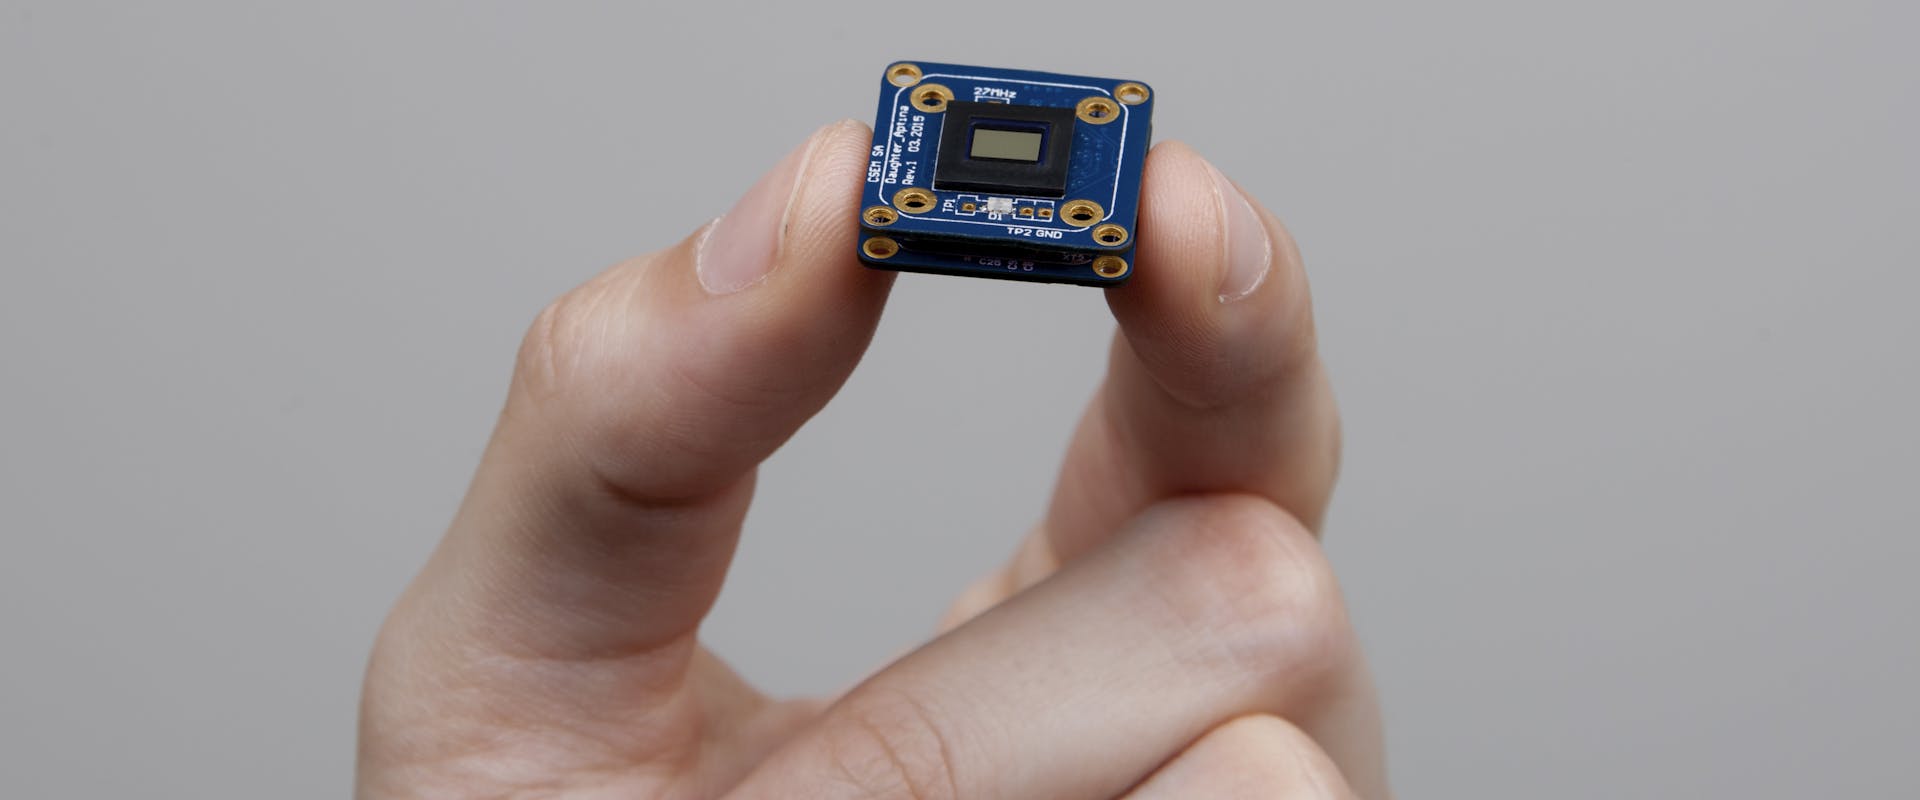 Hand holding a microchip